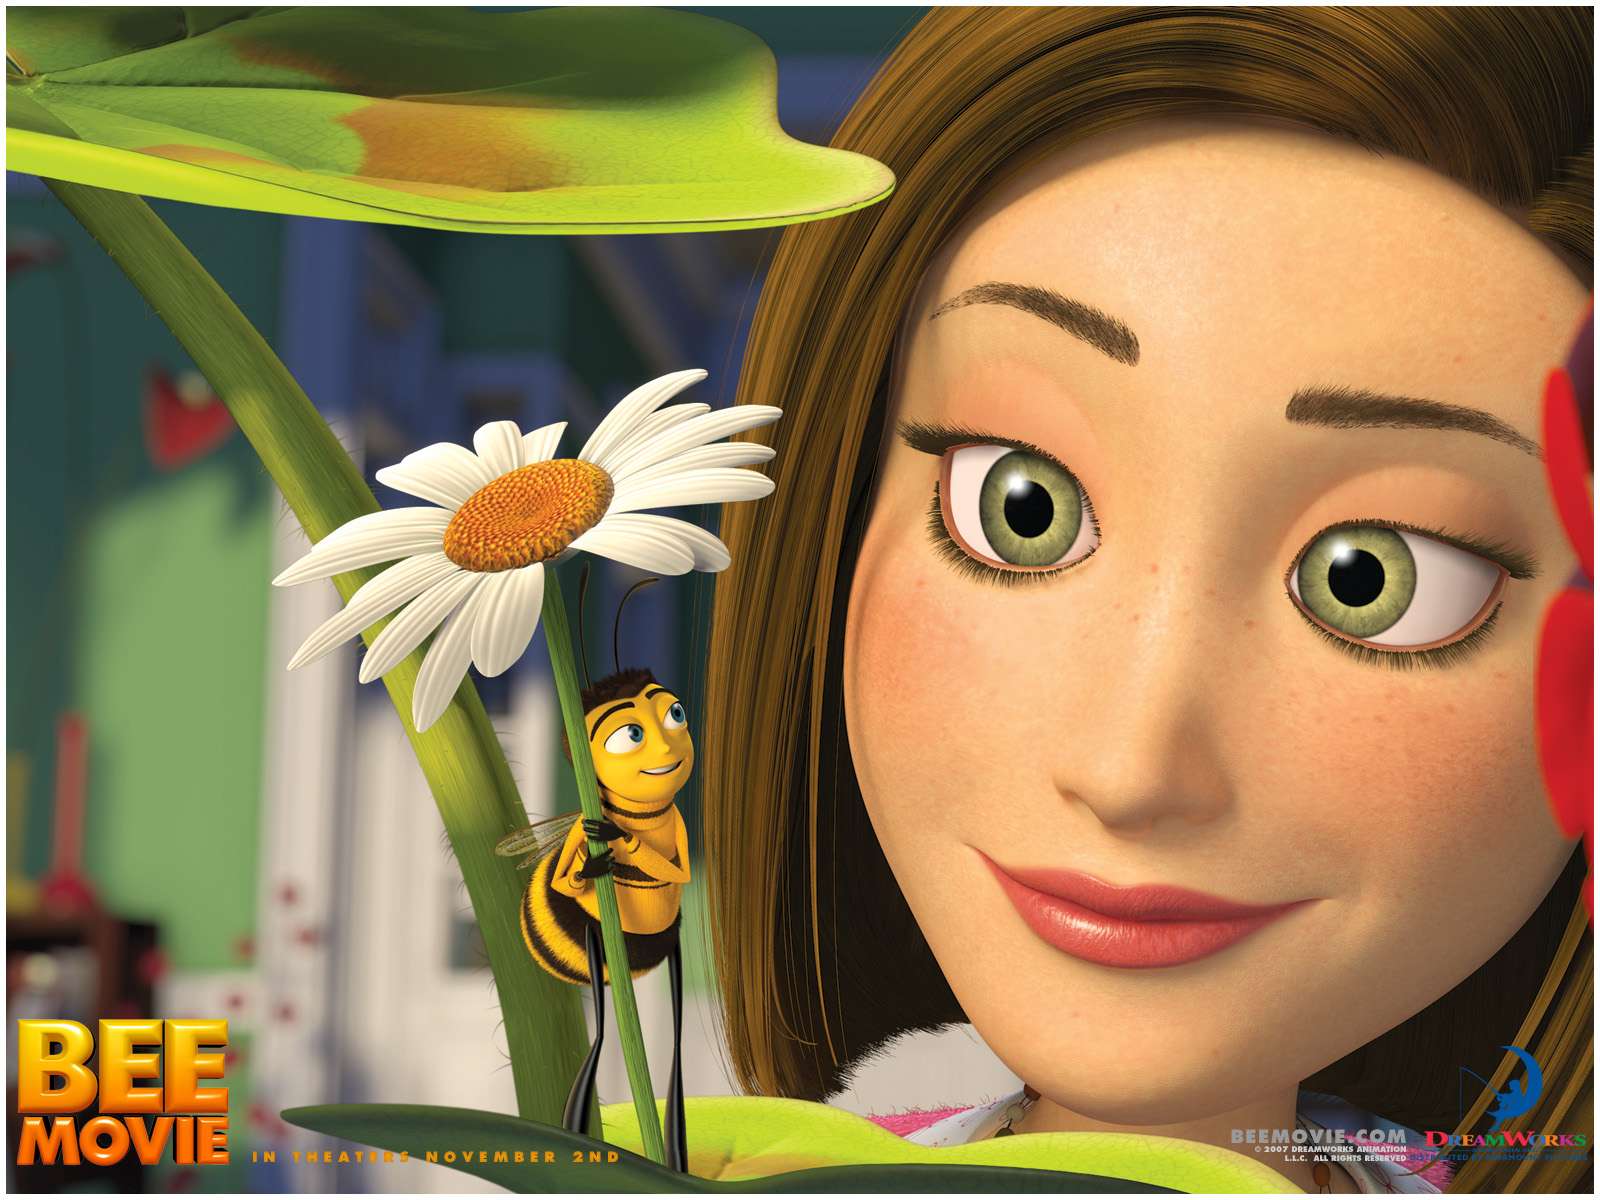 Vanishing Of The Bees Bee Movie And Precautionary Principle